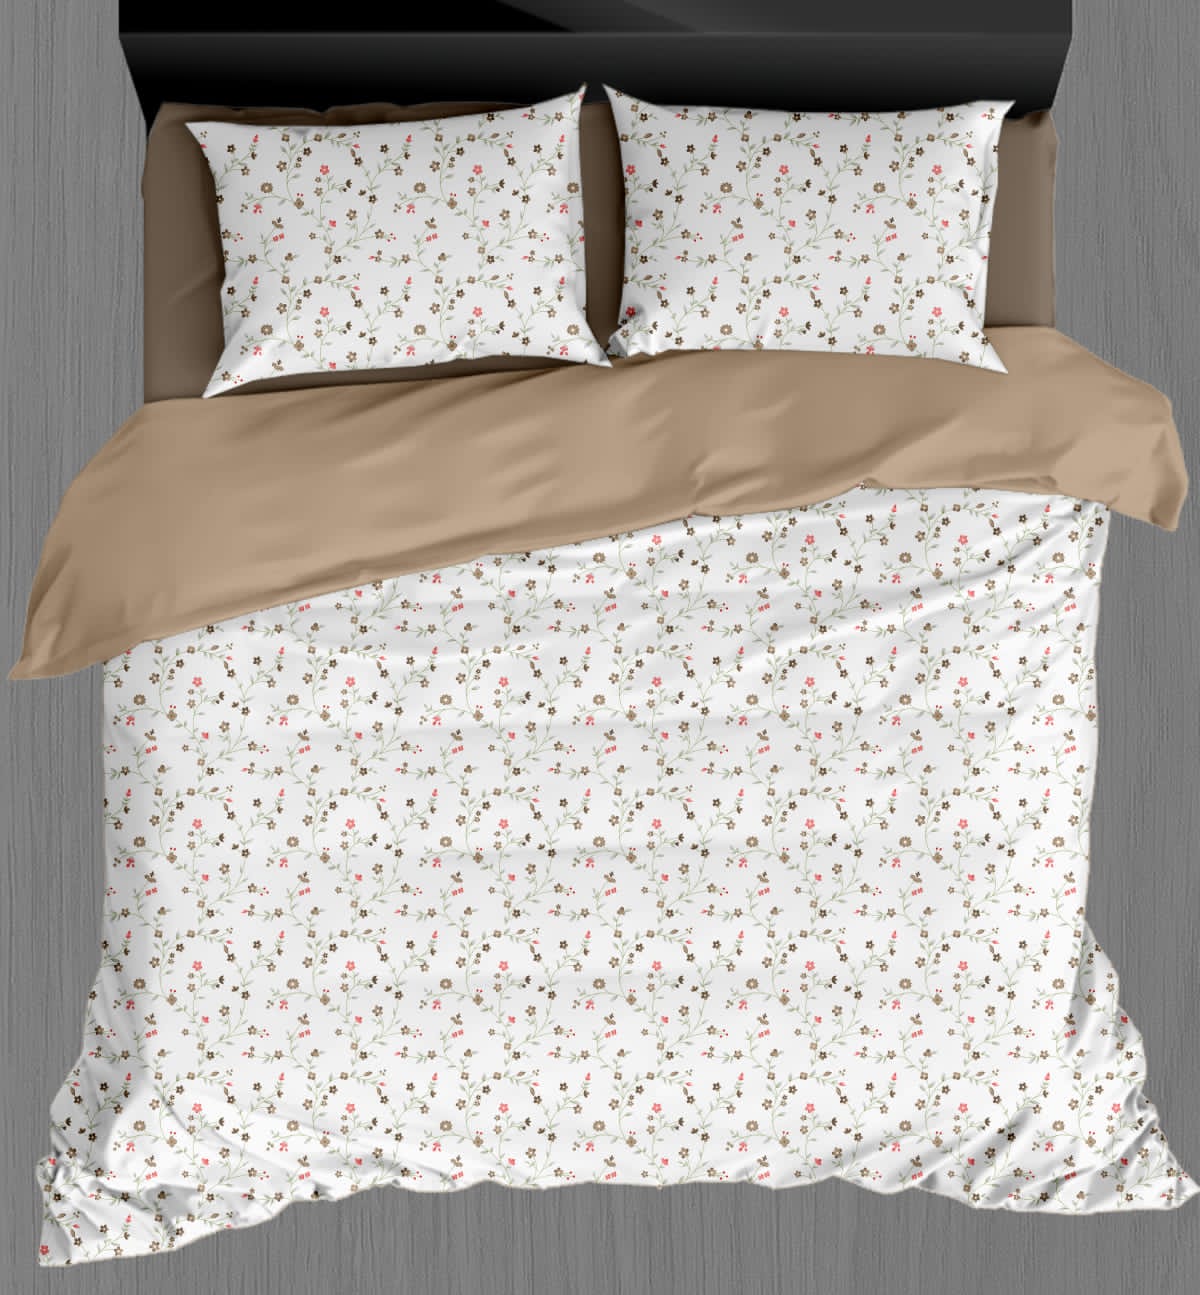 Extra Smooth Light Shade King Size Premium Bedsheet